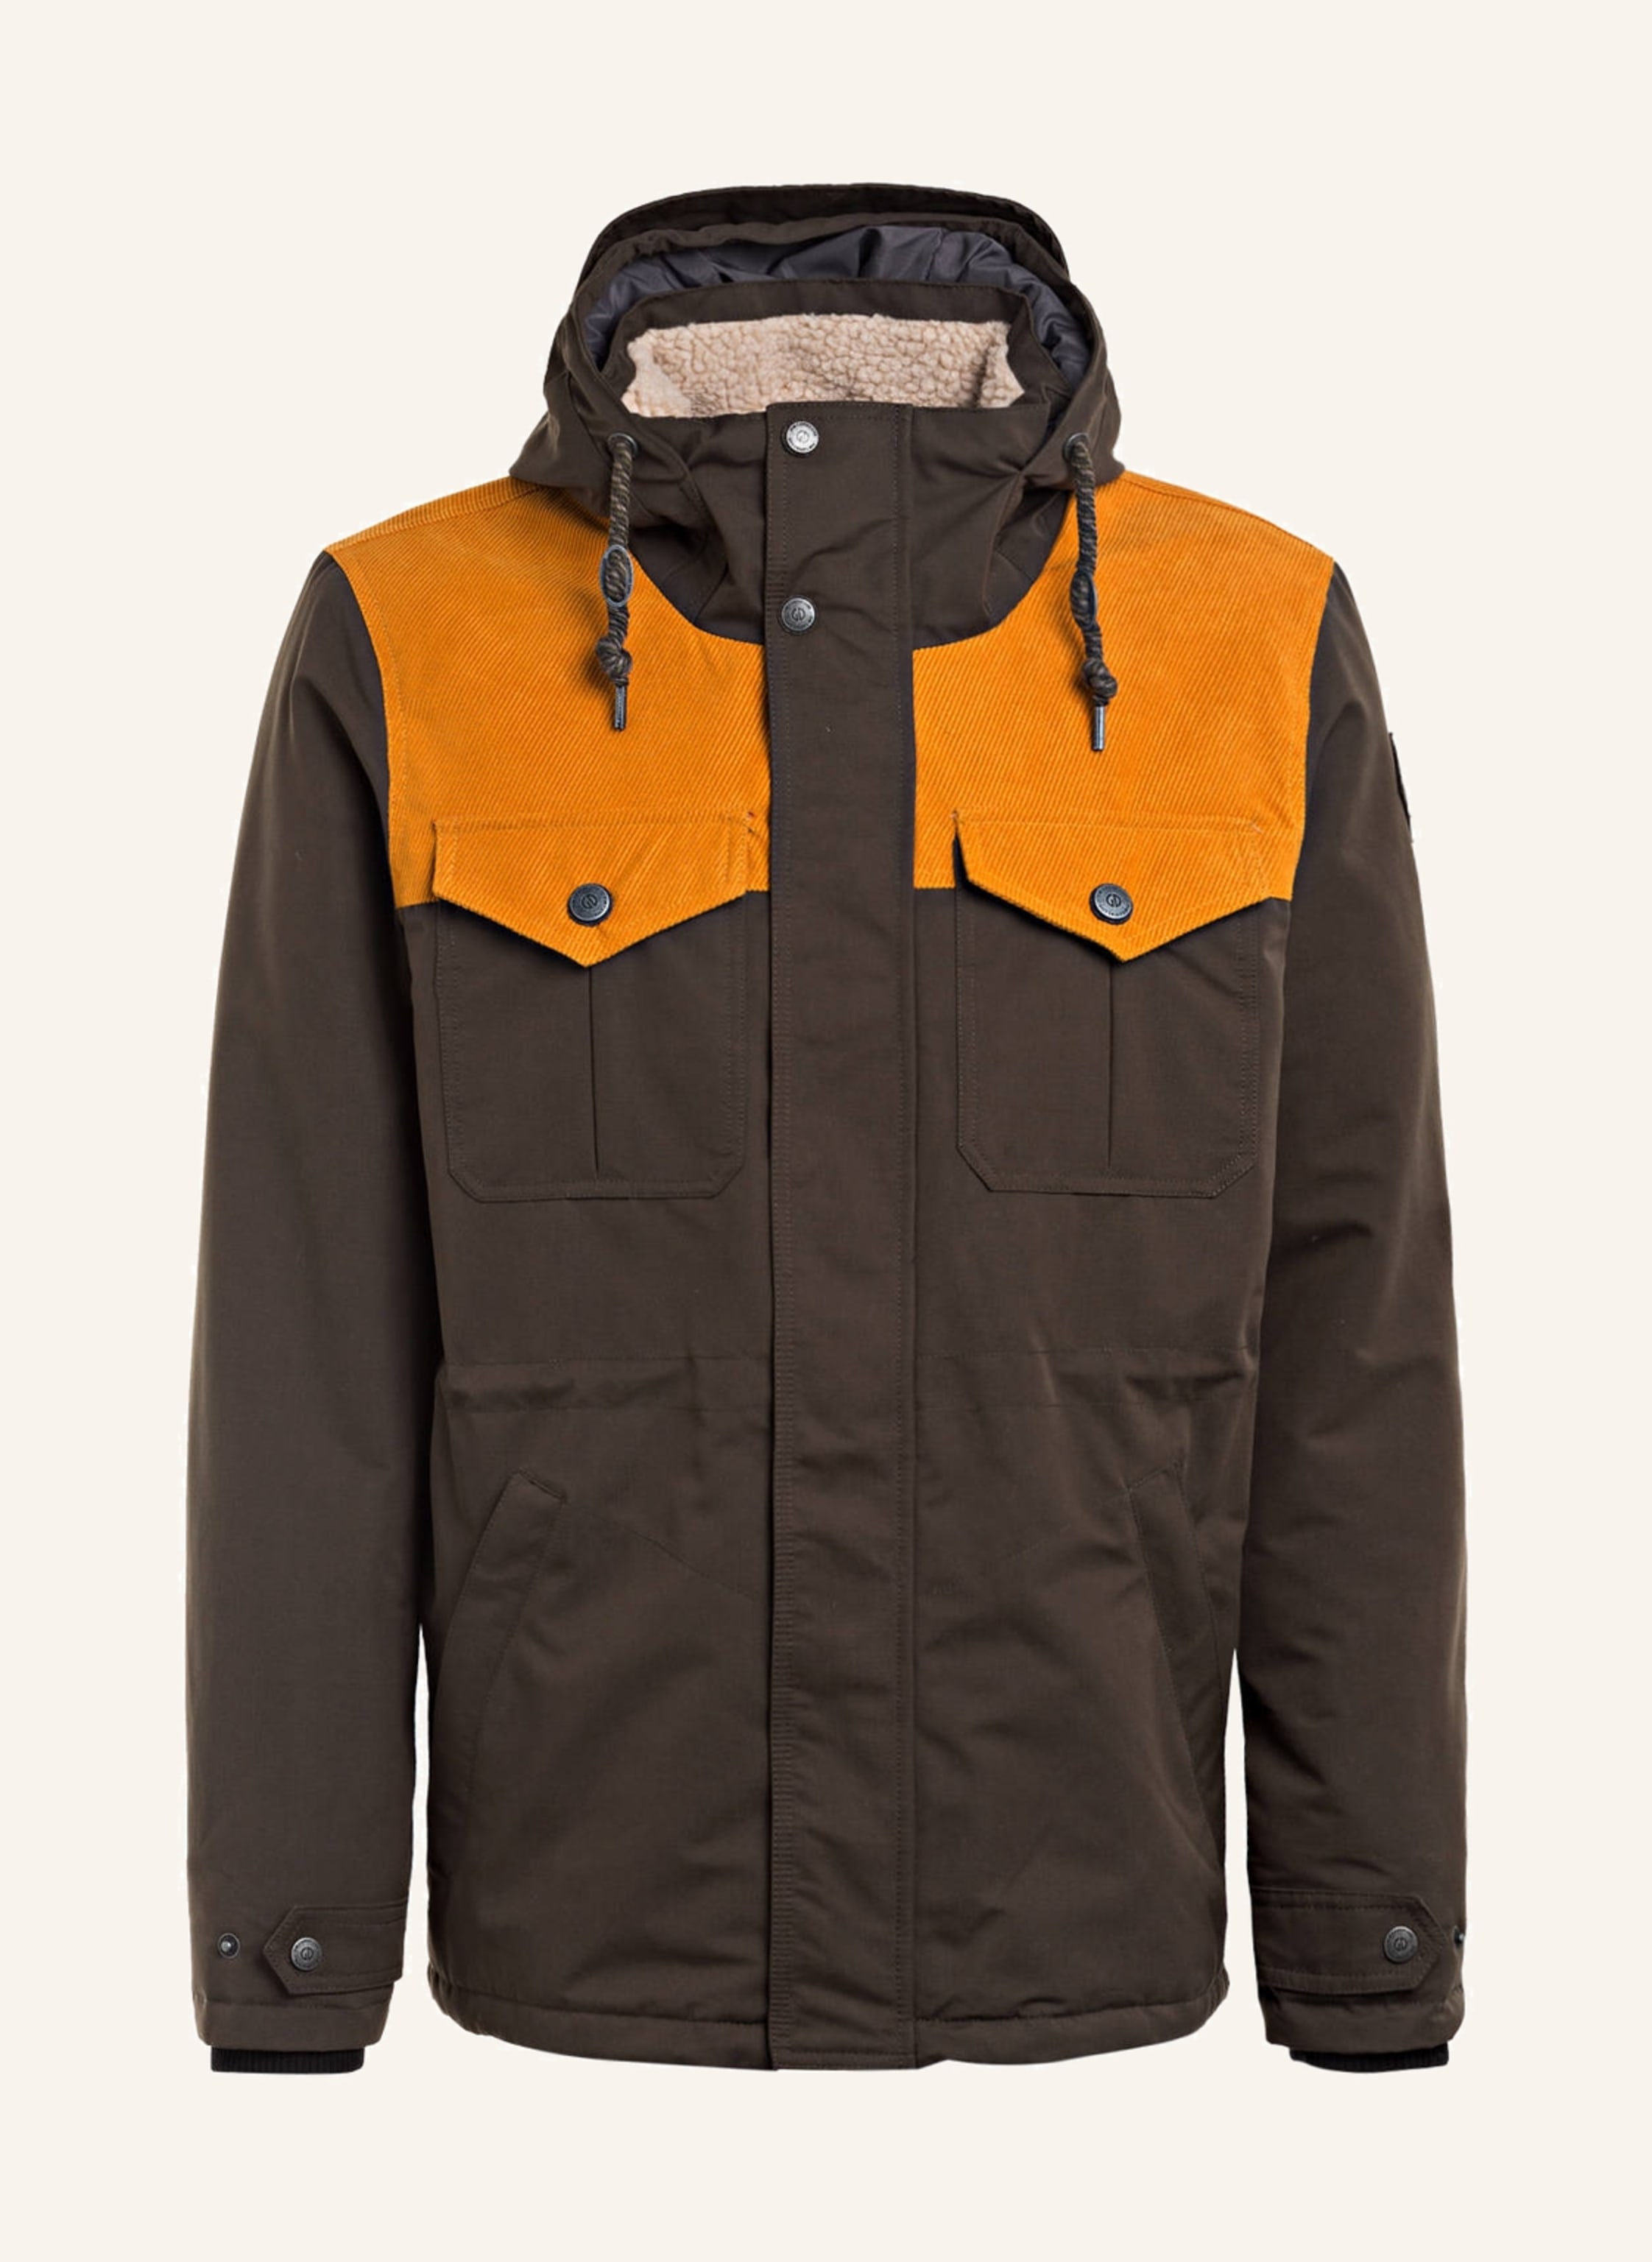 G.I.G.A. DX STORMIGA Outdoor in jacket by orange dark brown/ killtec